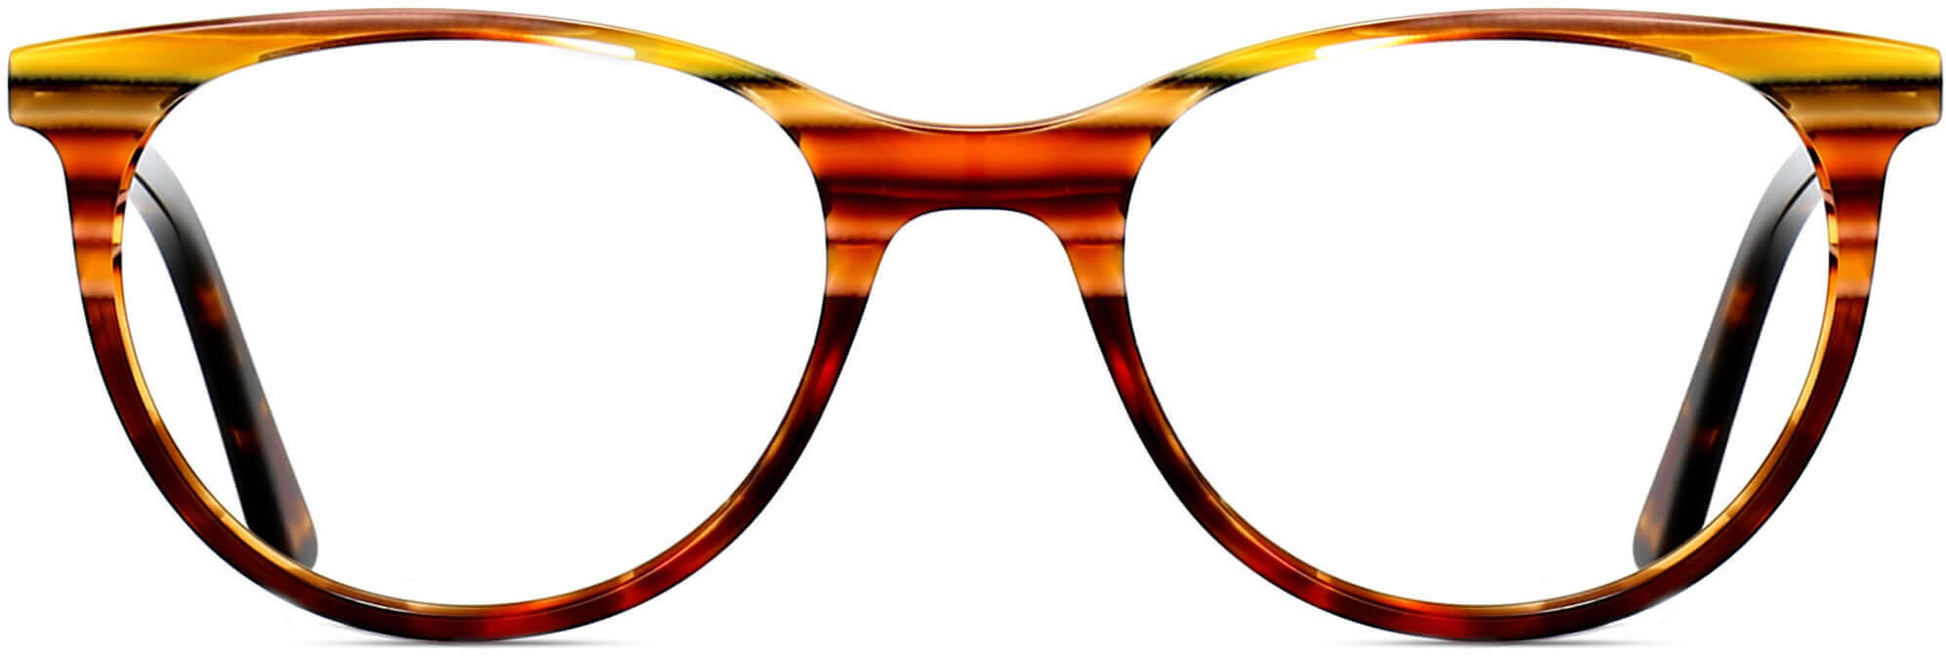 Eliza Cateye Tortoise Eyeglasses from ANRRI, front view